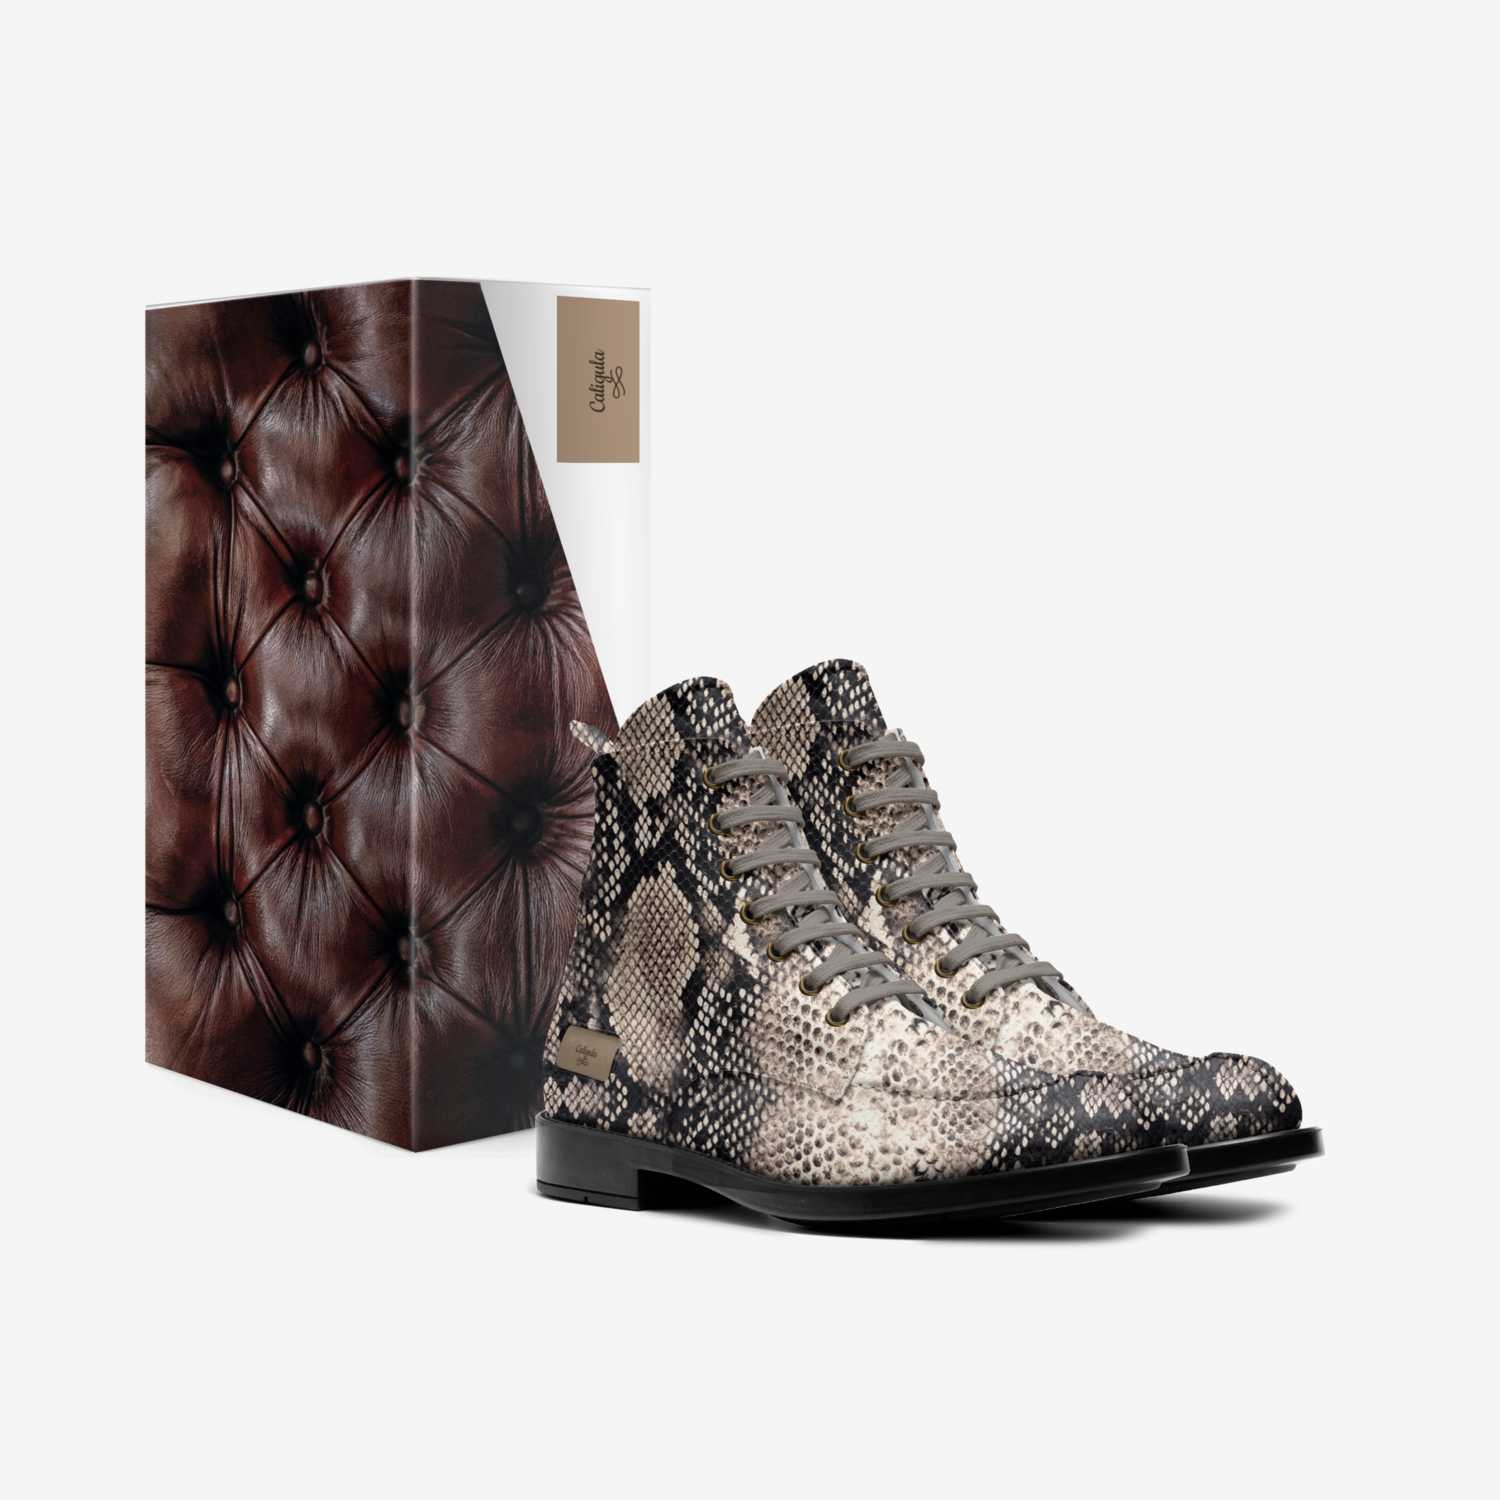 Caligula custom made in Italy shoes by Niru | Box view